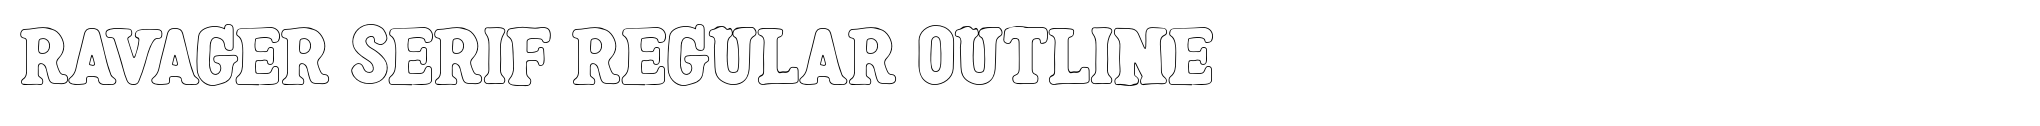 Ravager Serif Regular Outline image